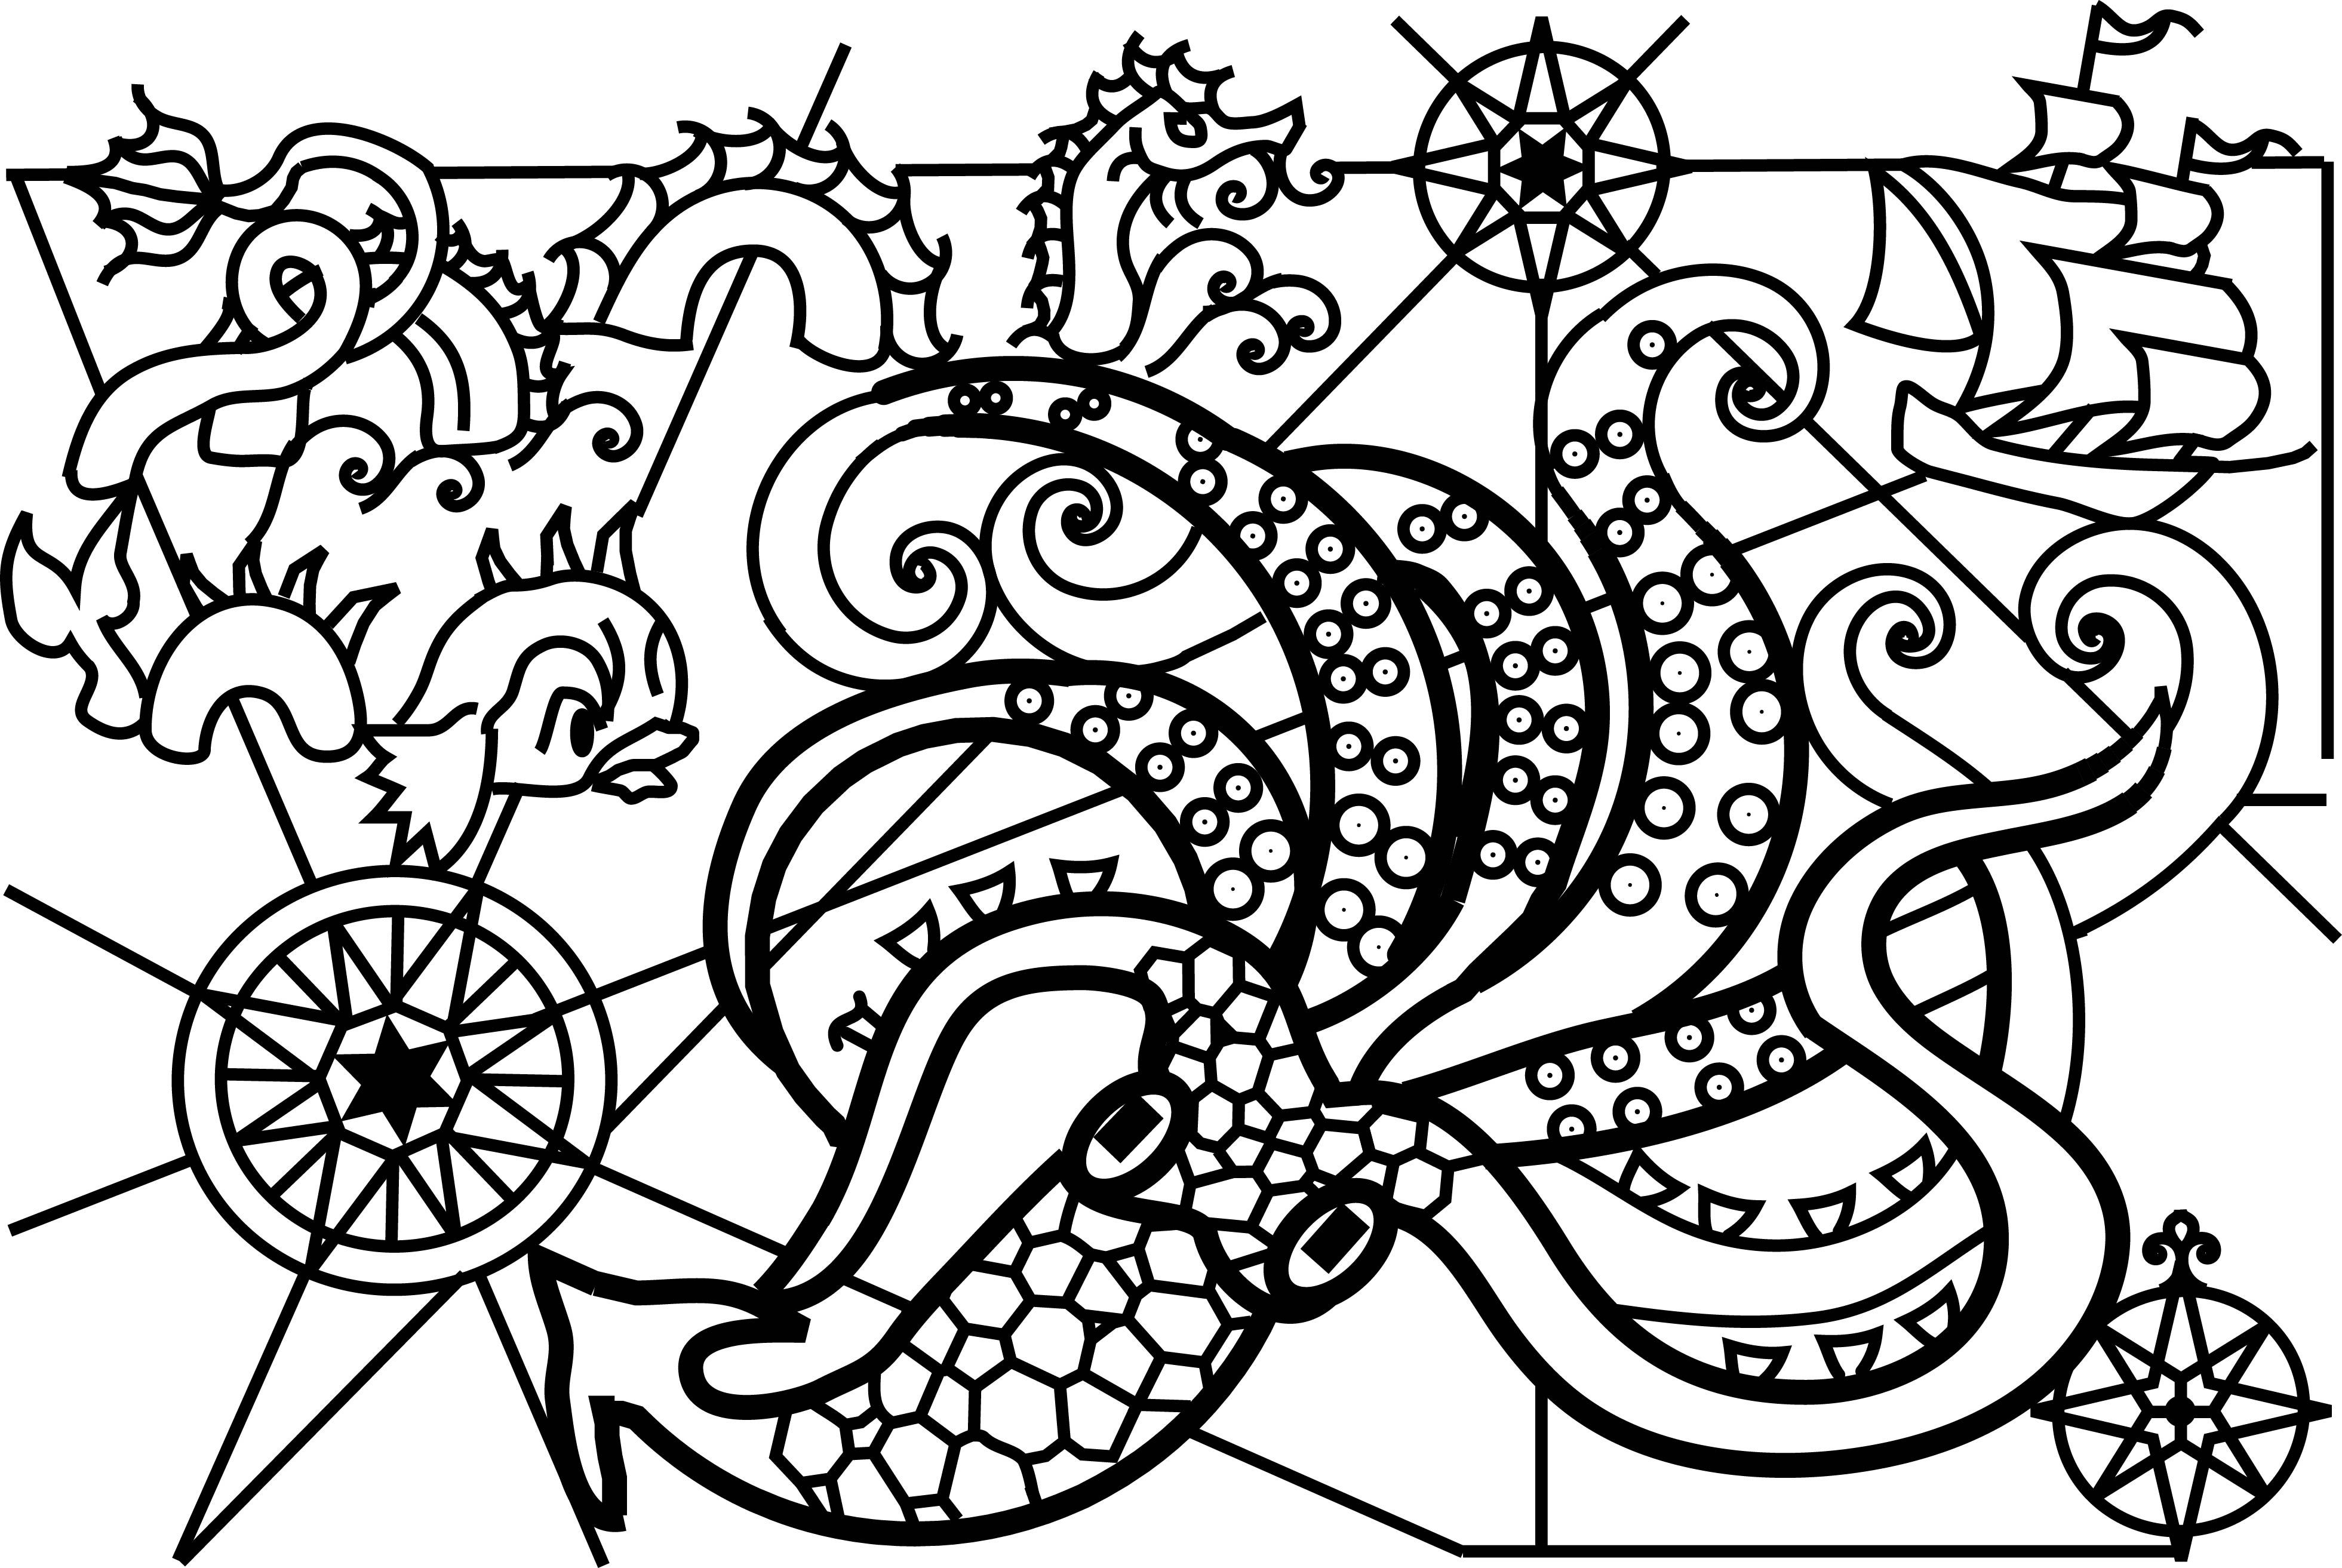 Kraken Maze for ads line drawing - Treinen Farm ~ Corn Maze & Pumpkin Patch  | Line drawing, Coloring pages, Drawings